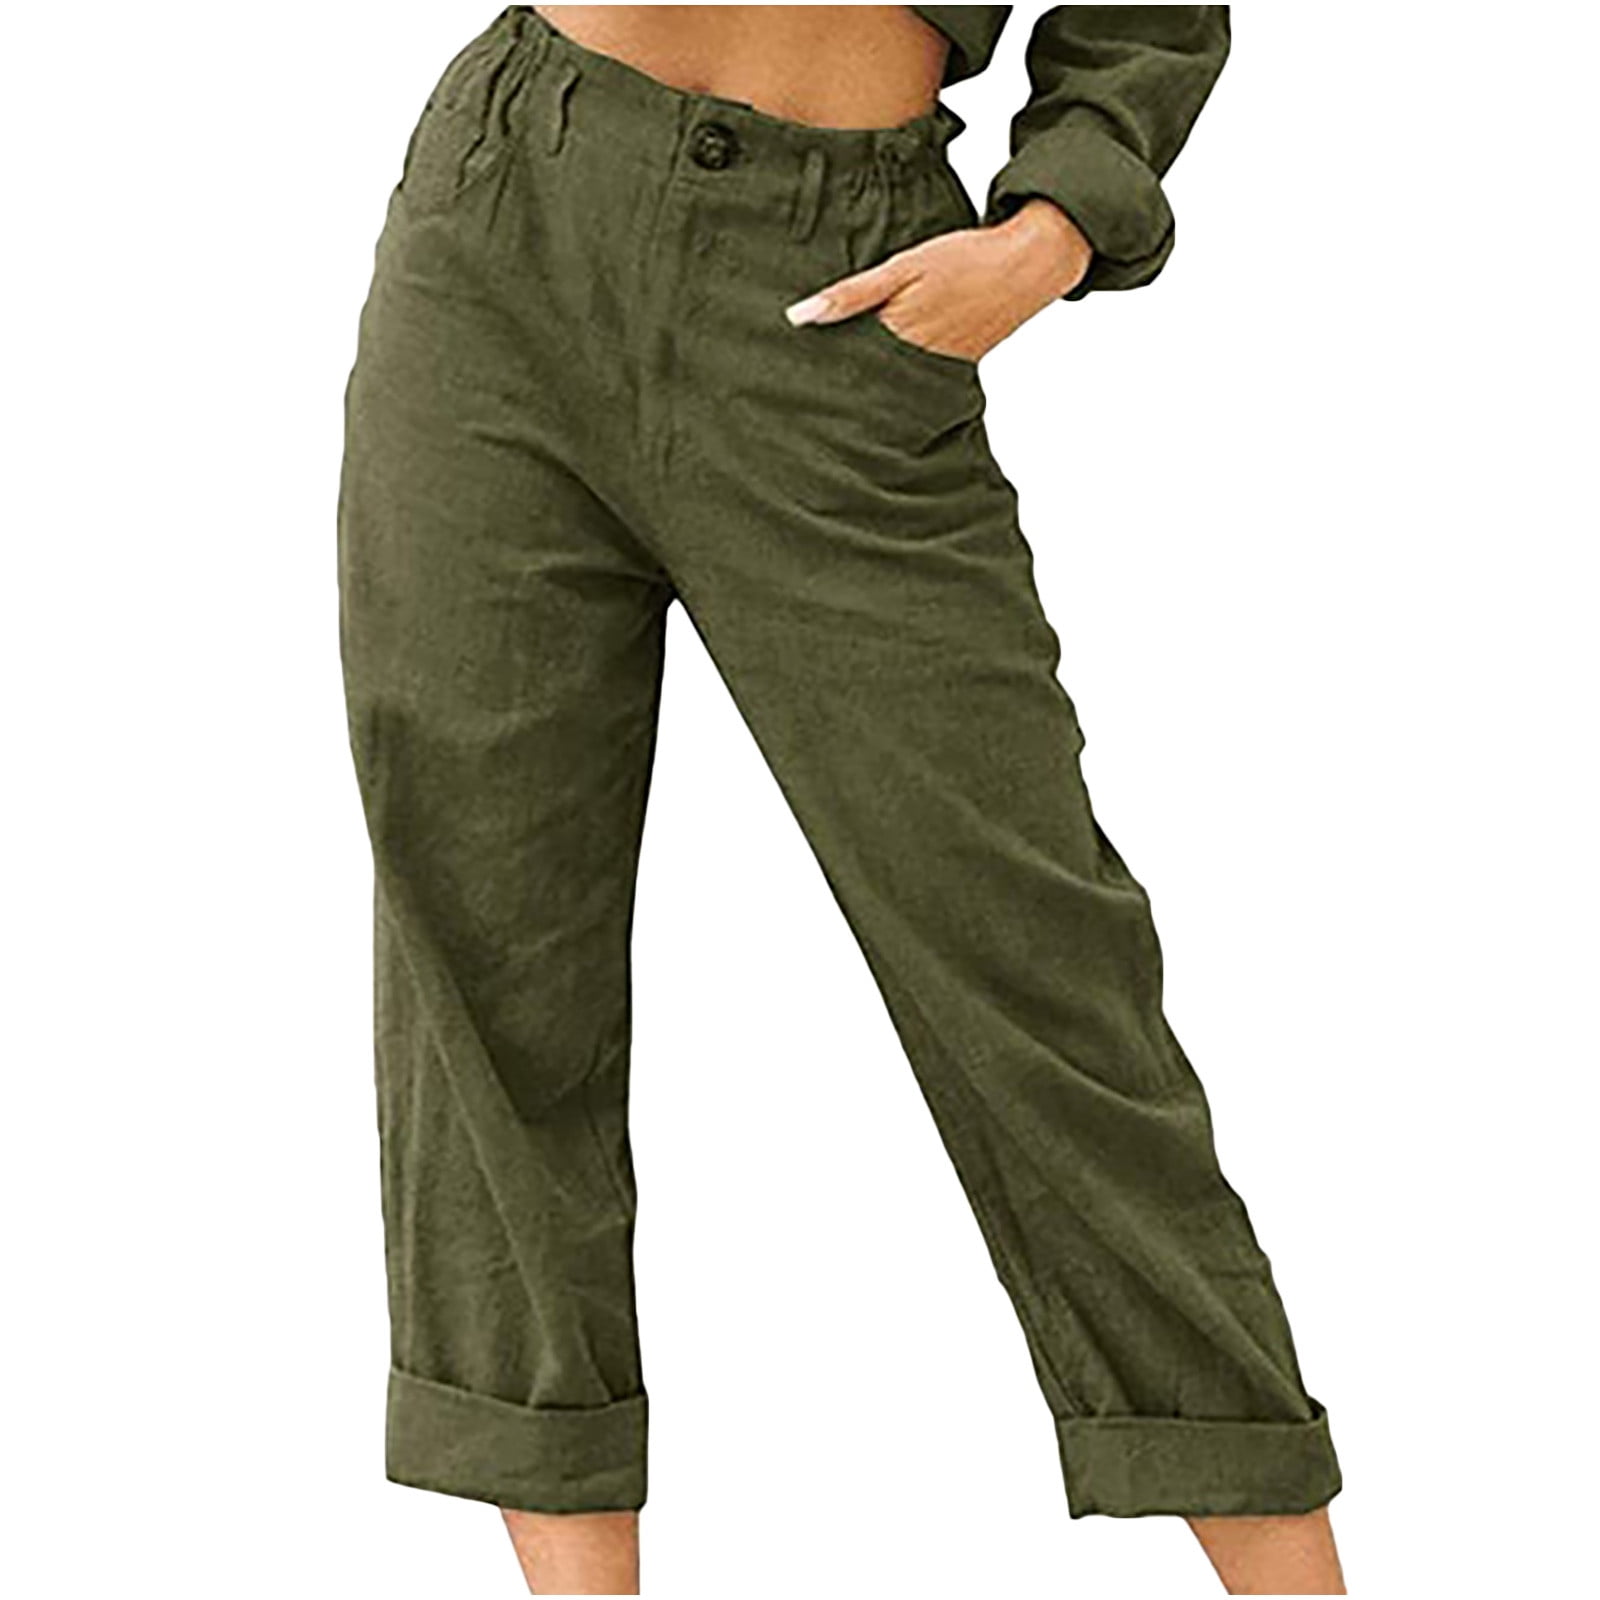 Mrat Full Length Pants Women's Pants Wear to Work Ladies Casual Solid ...